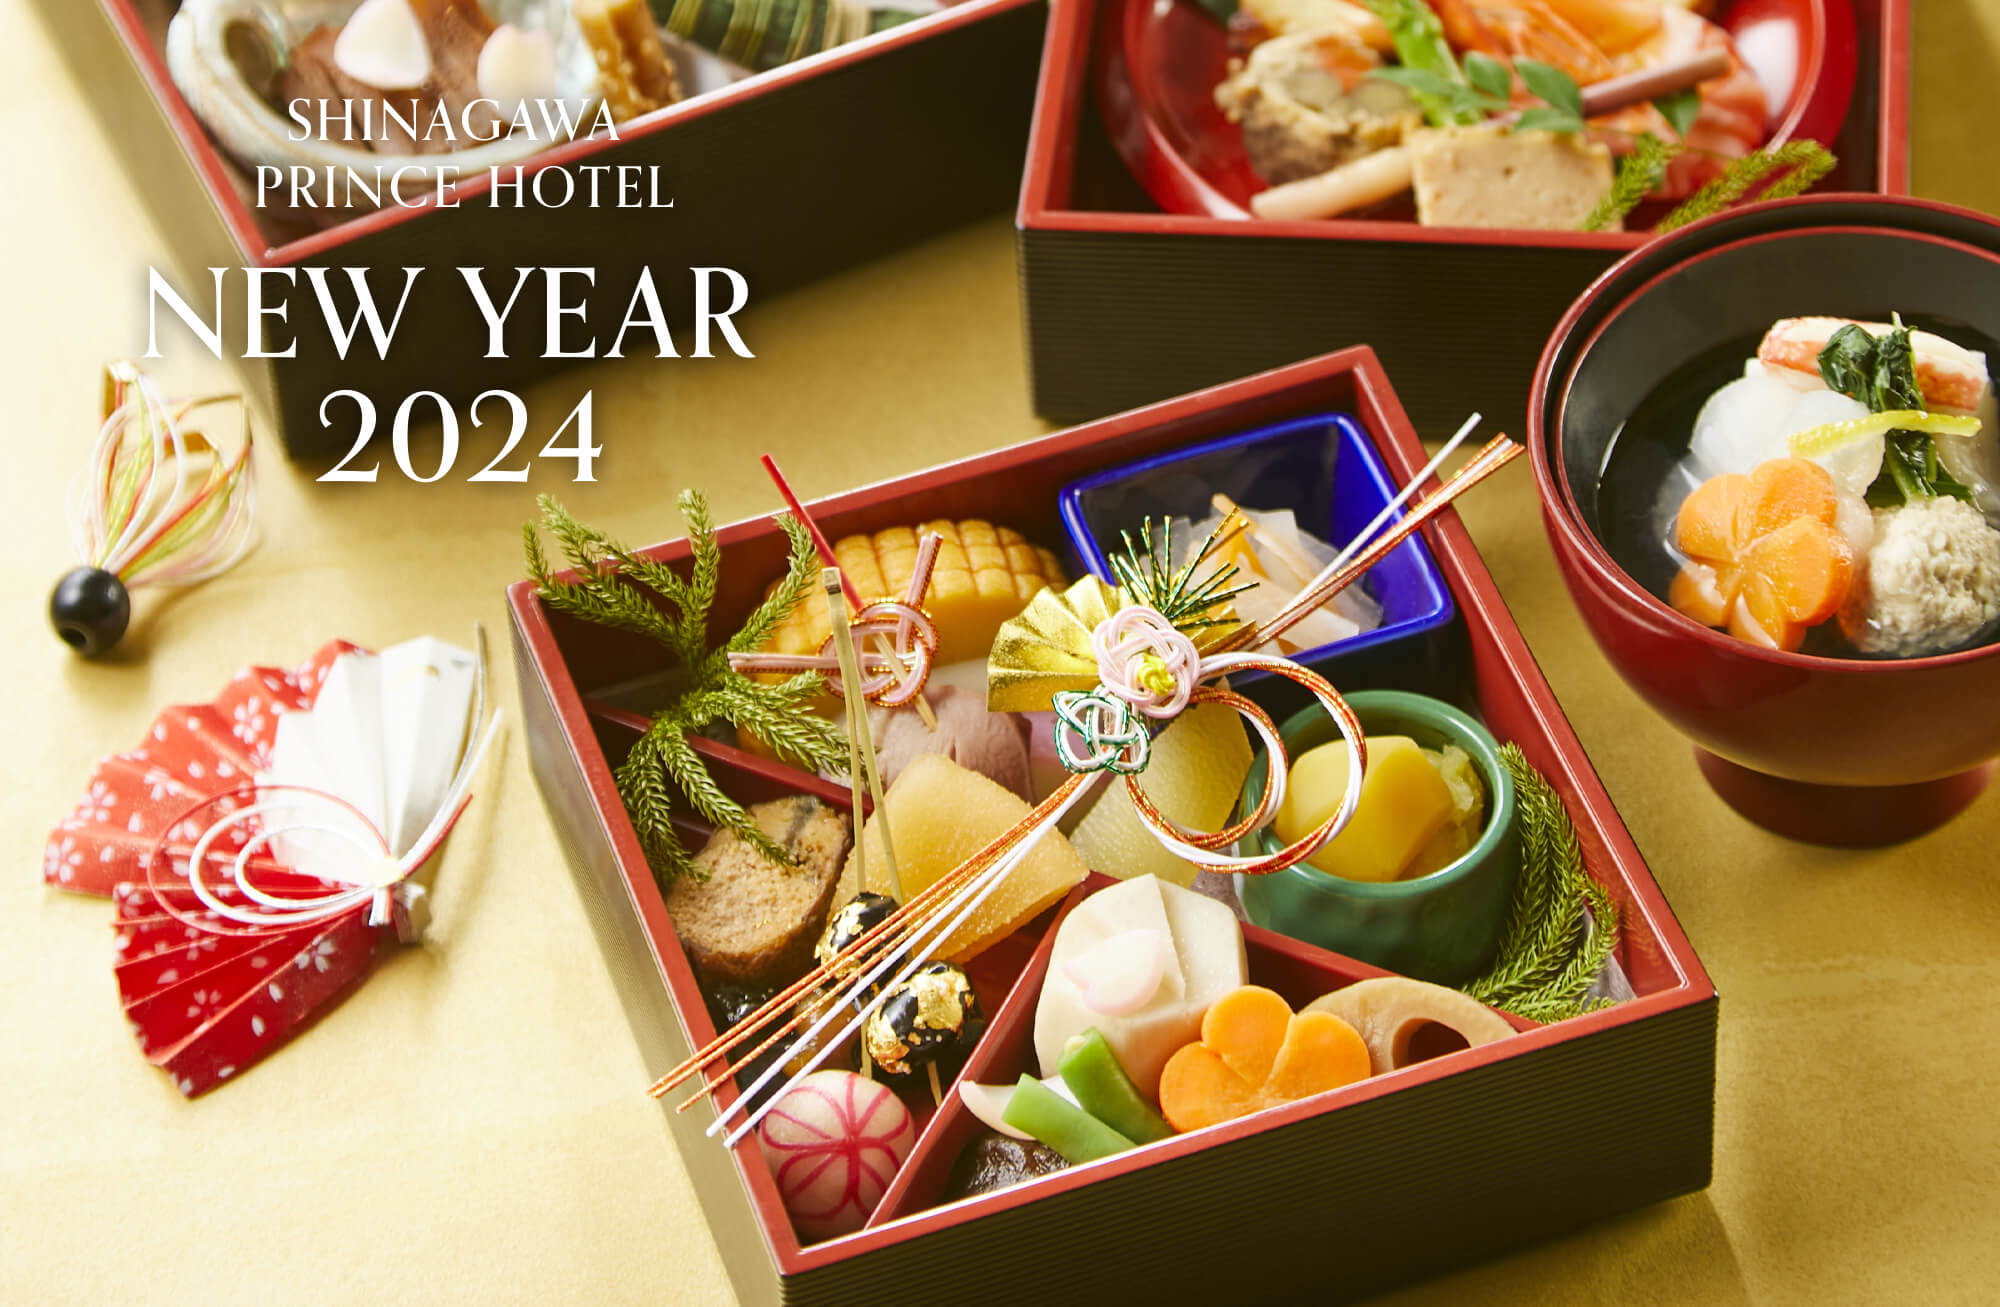 SHINAGAWA PRINCE HOTEL NEW YEAR 2024